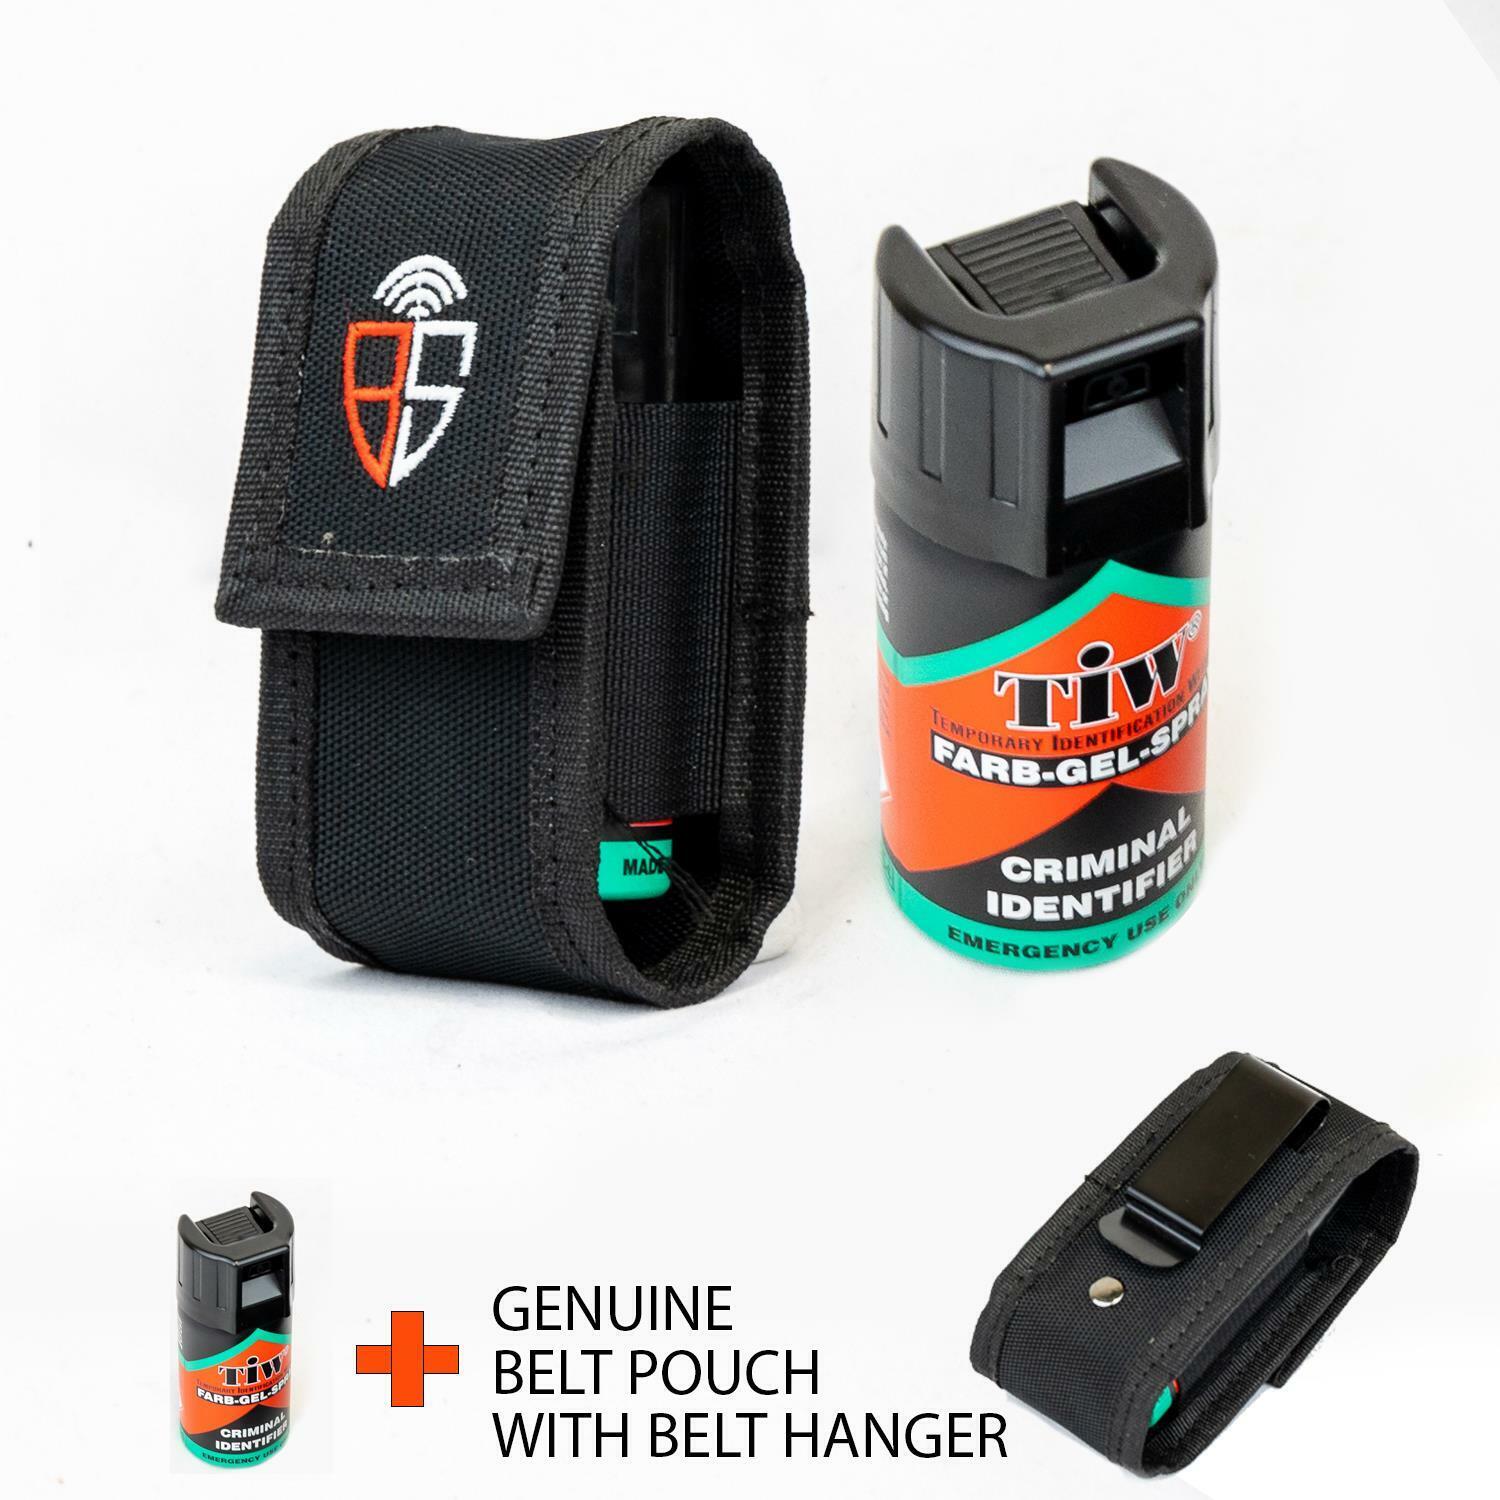 Self Defence TIW FARB gel emergency spray with genuine belt pouc